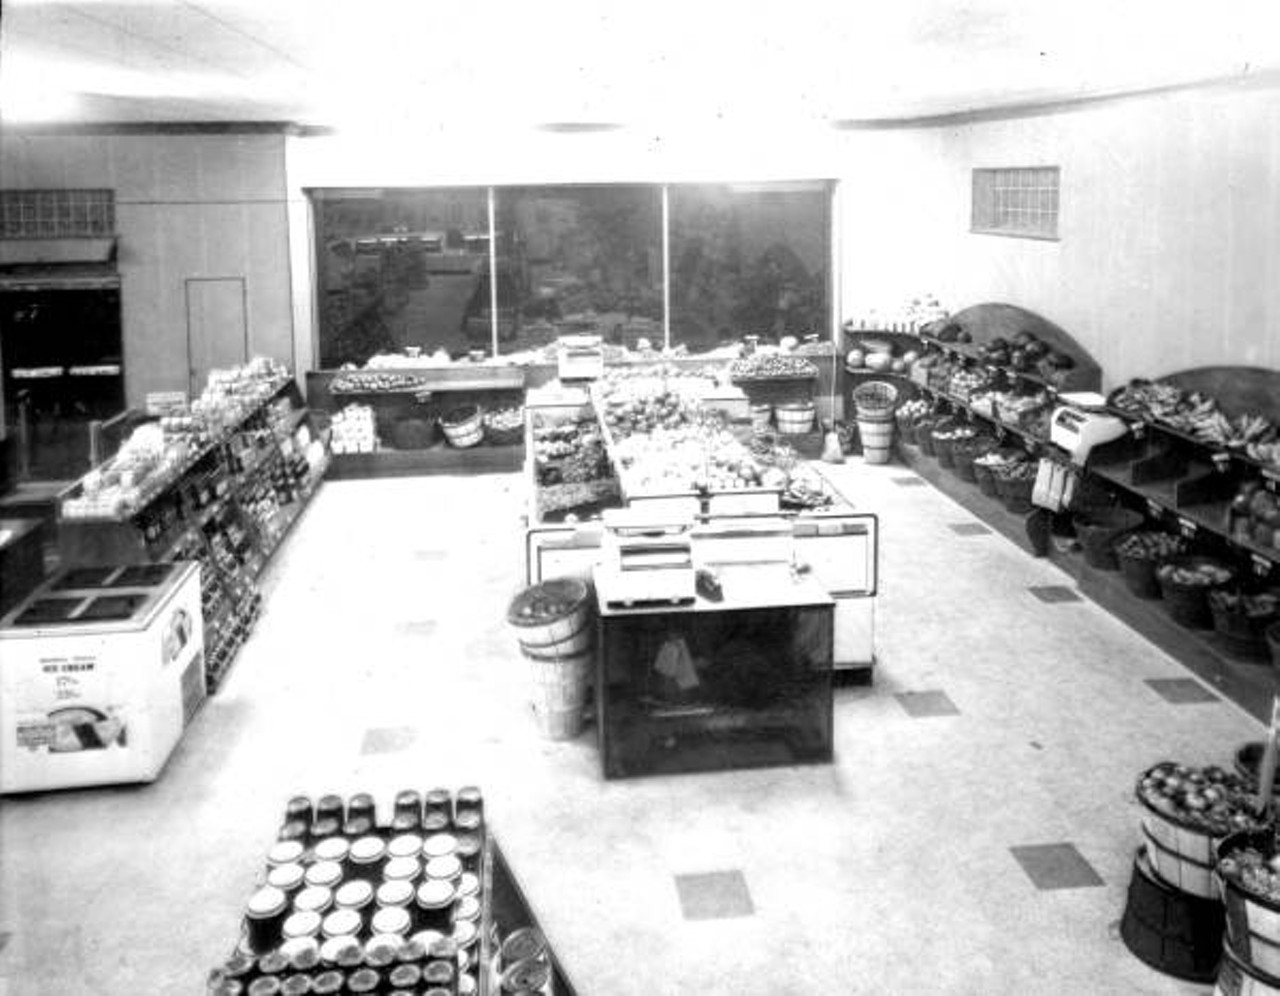 First Publix super market - Winter Haven, Florida, 1940.